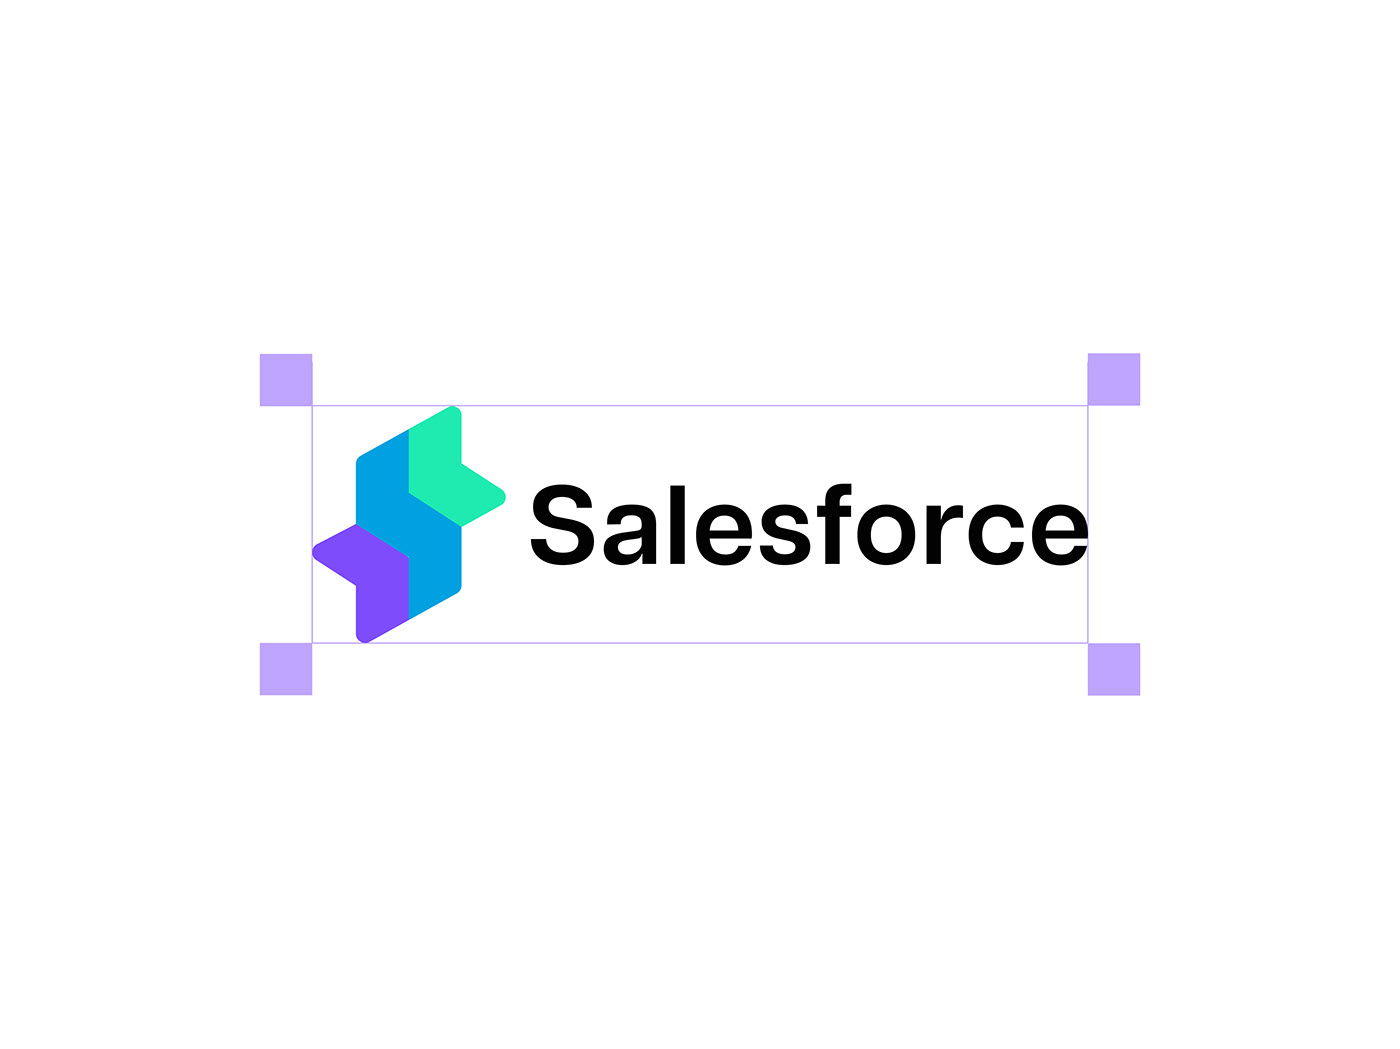 Salesforce marketing agency logo - Brand Identity & Logo Design